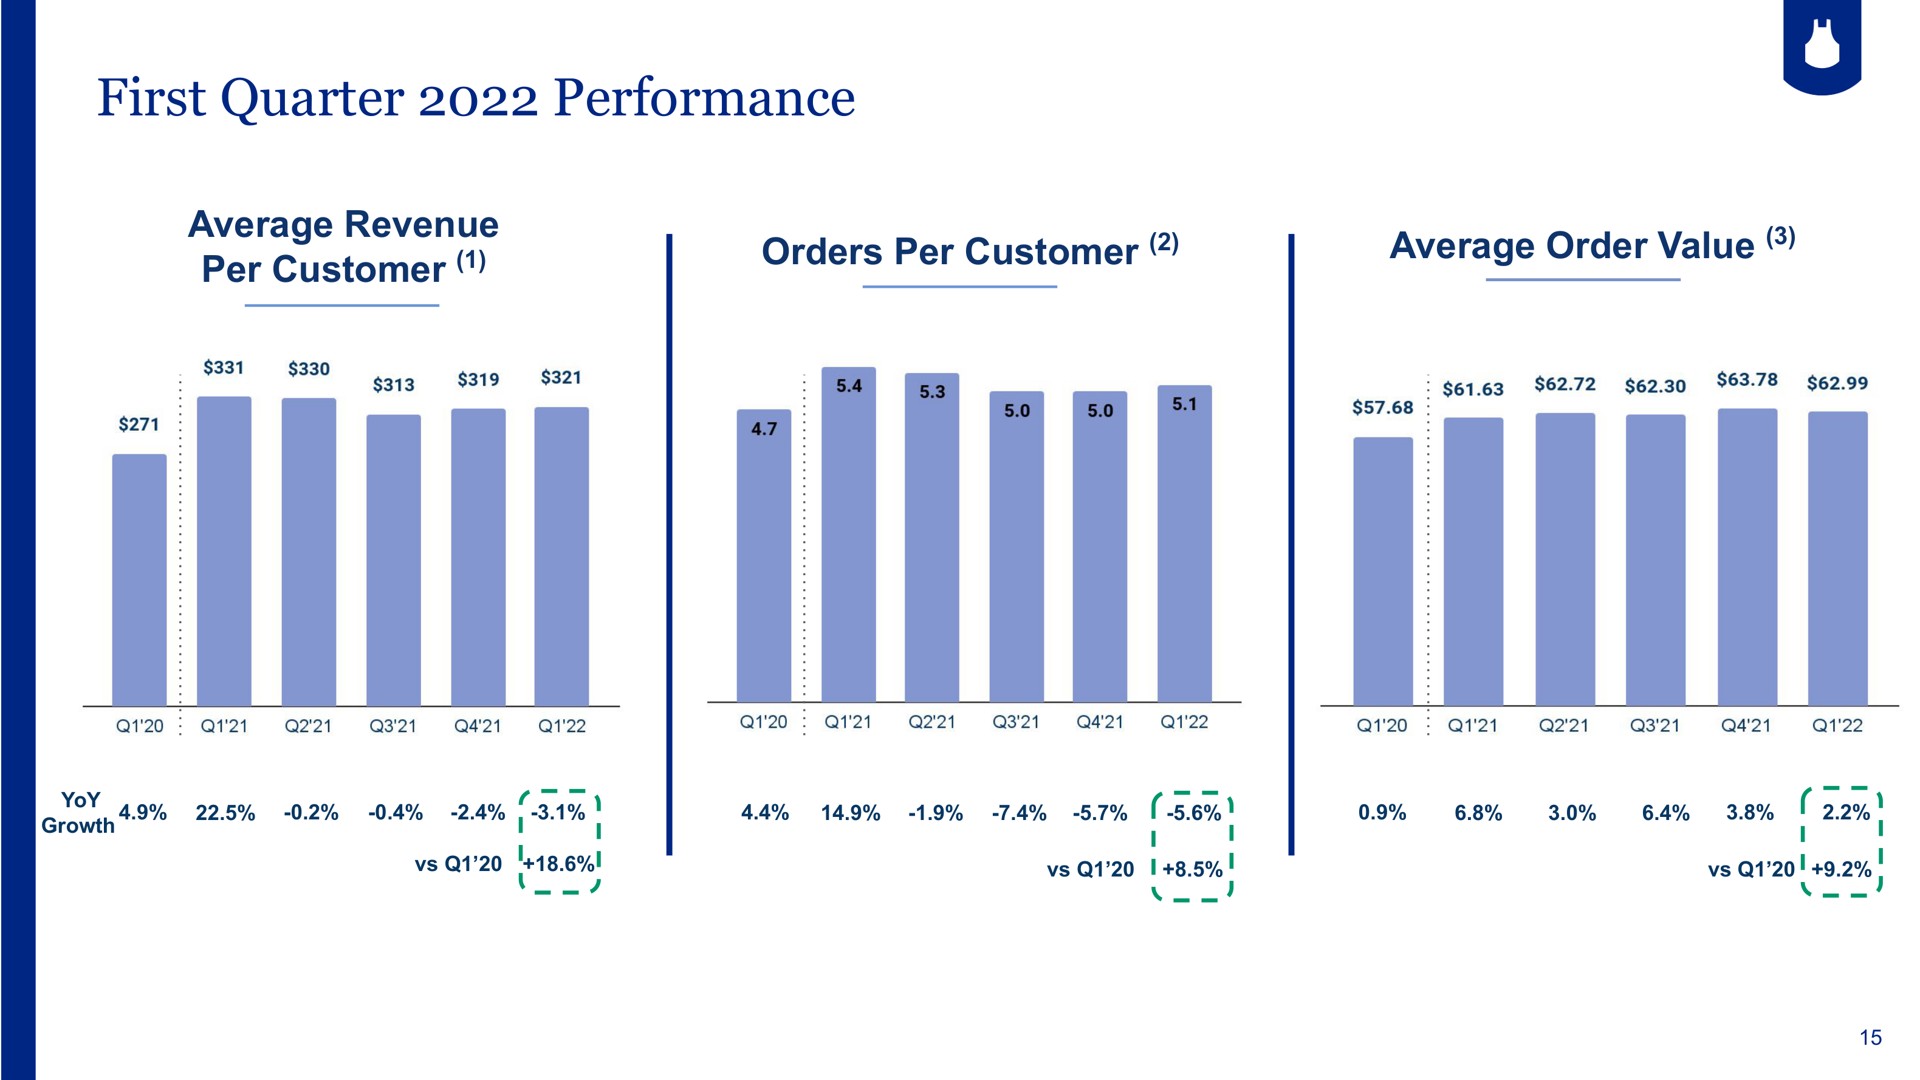 first quarter performance average revenue per customer orders per customer average order value | Blue Apron